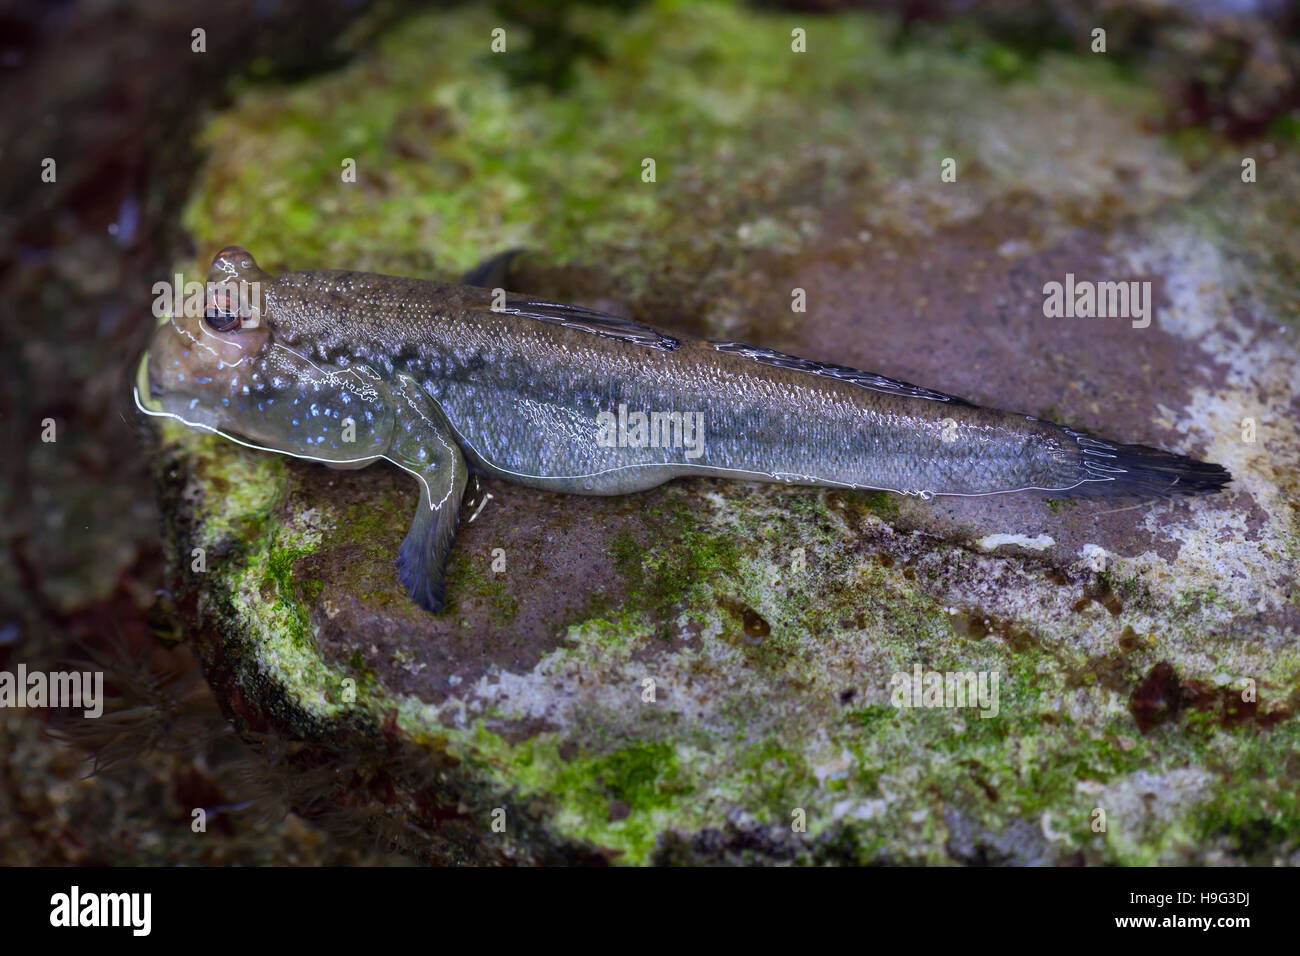 Atlantic mudskipper (Periophthalmus barbarus). Marine fish. Stock Photo